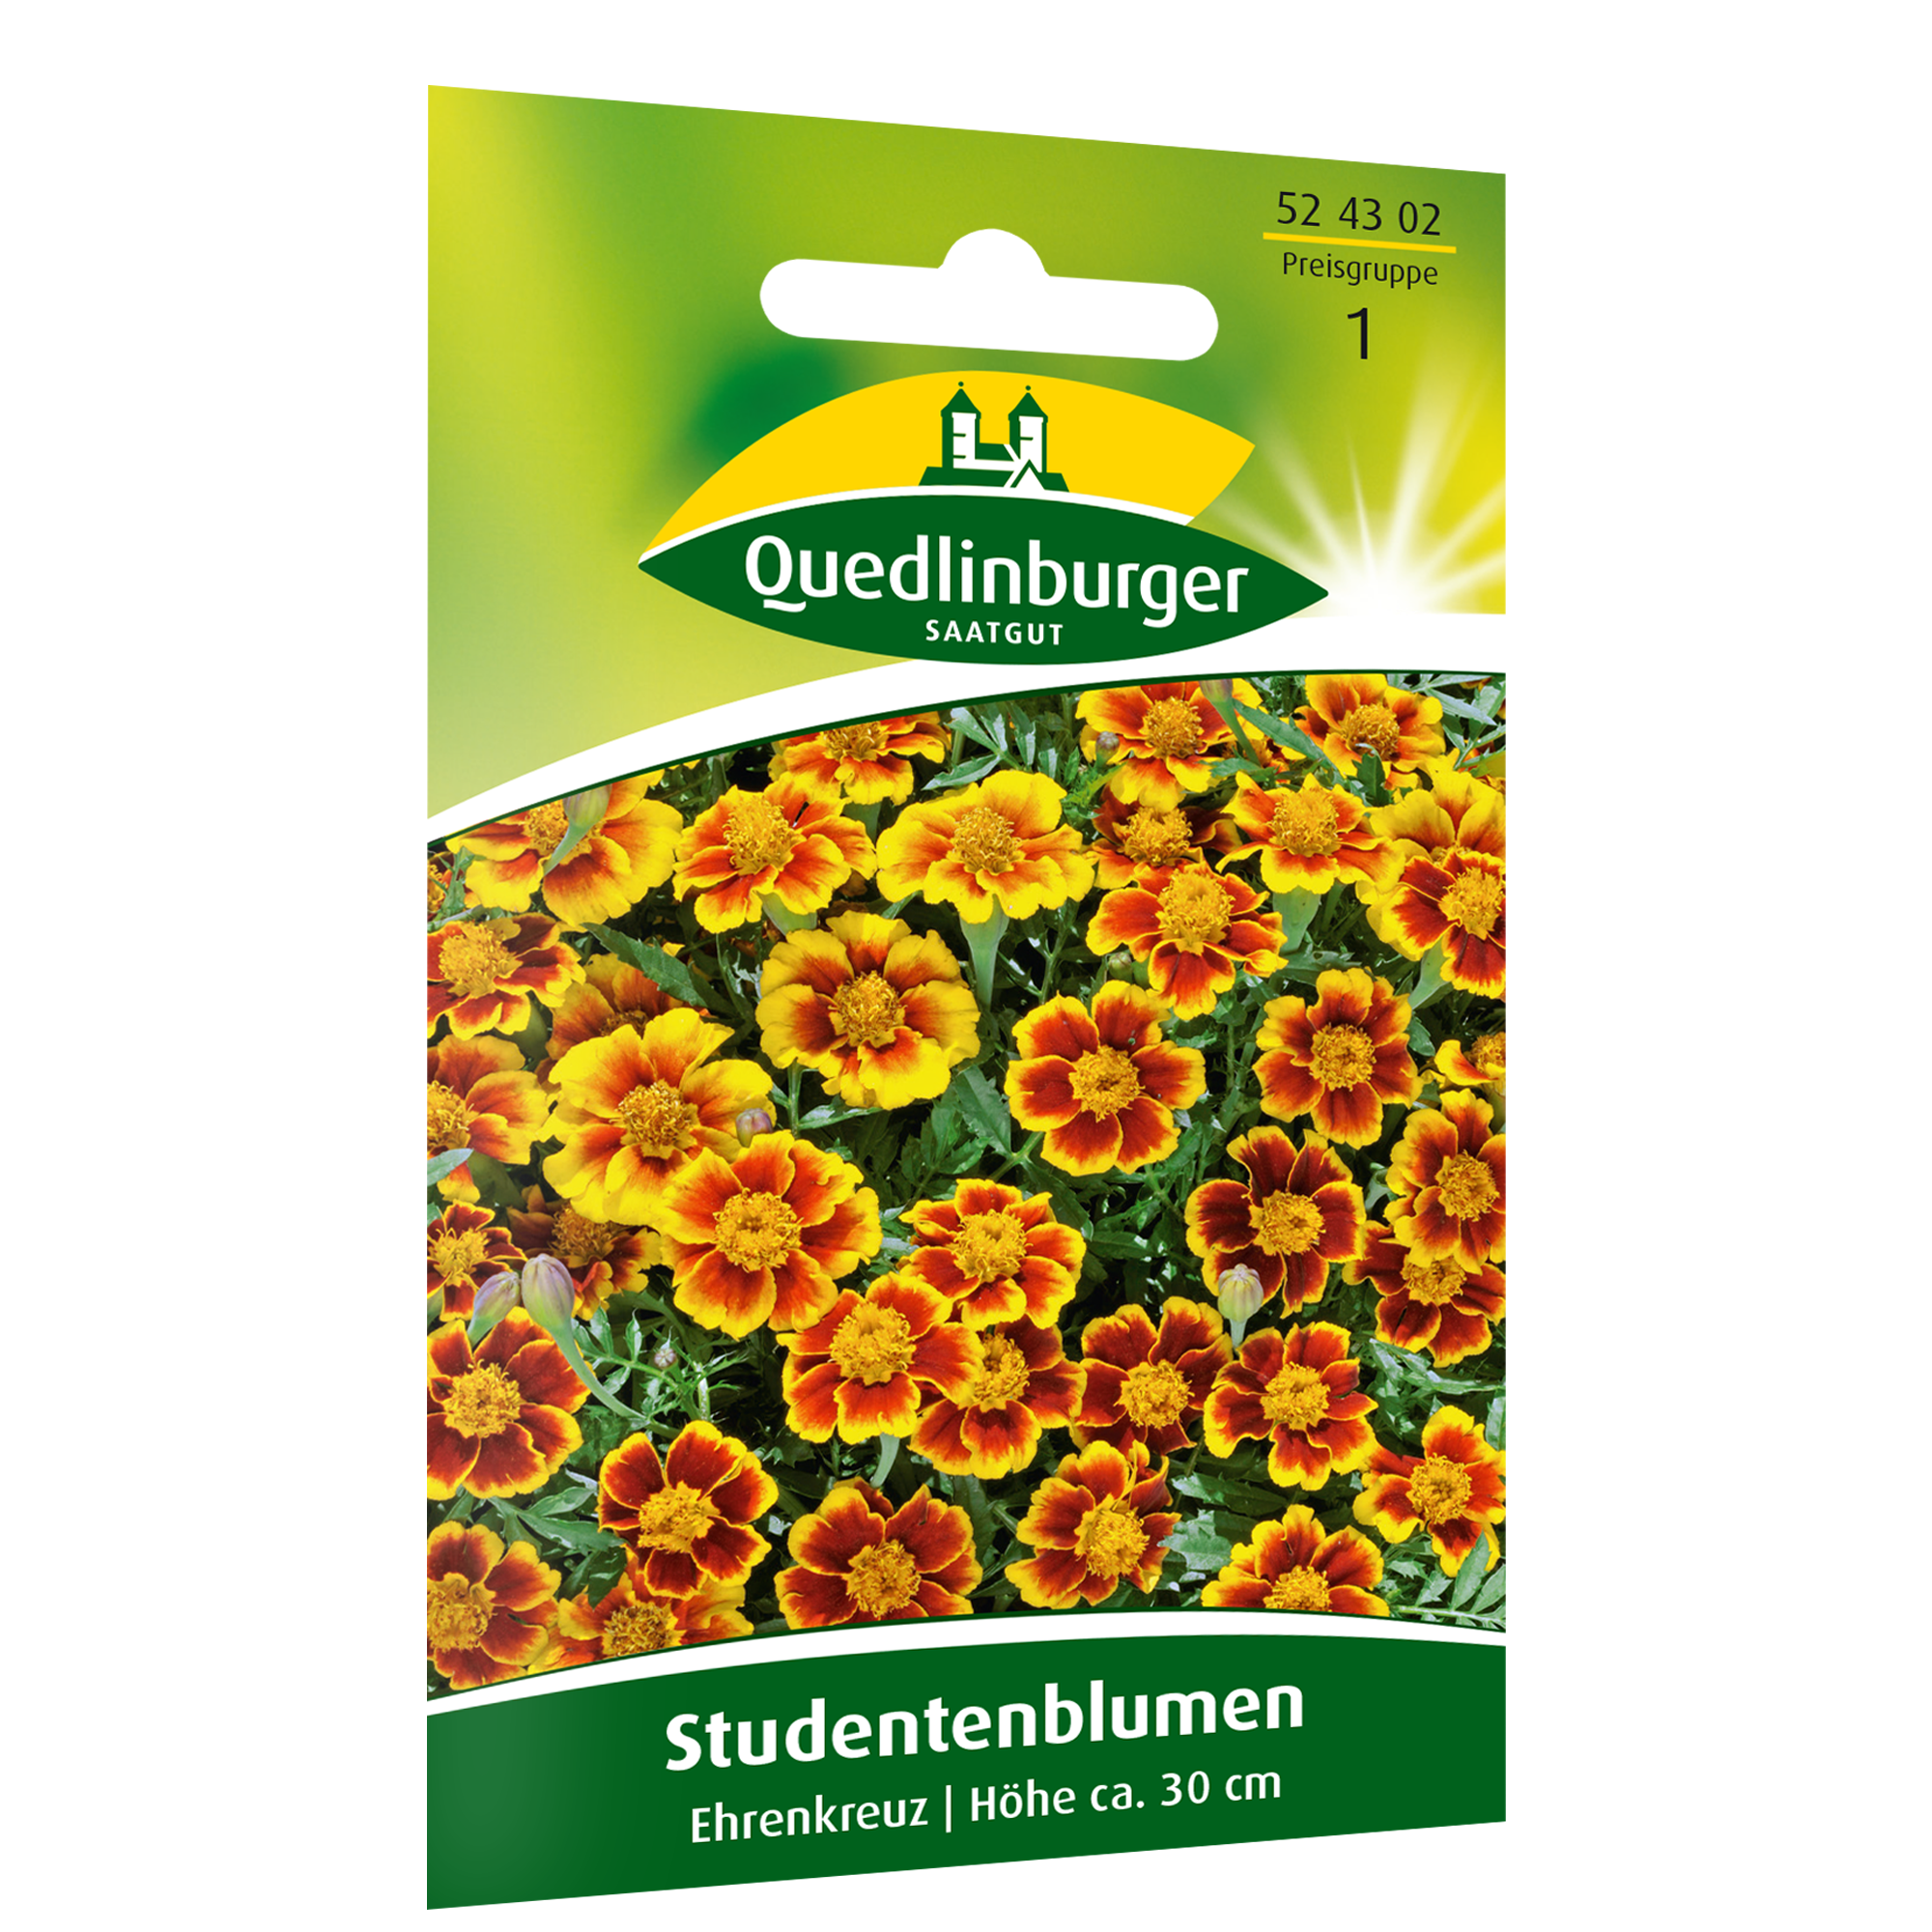 Studentenblumen 'Ehrenkreuz' + product picture